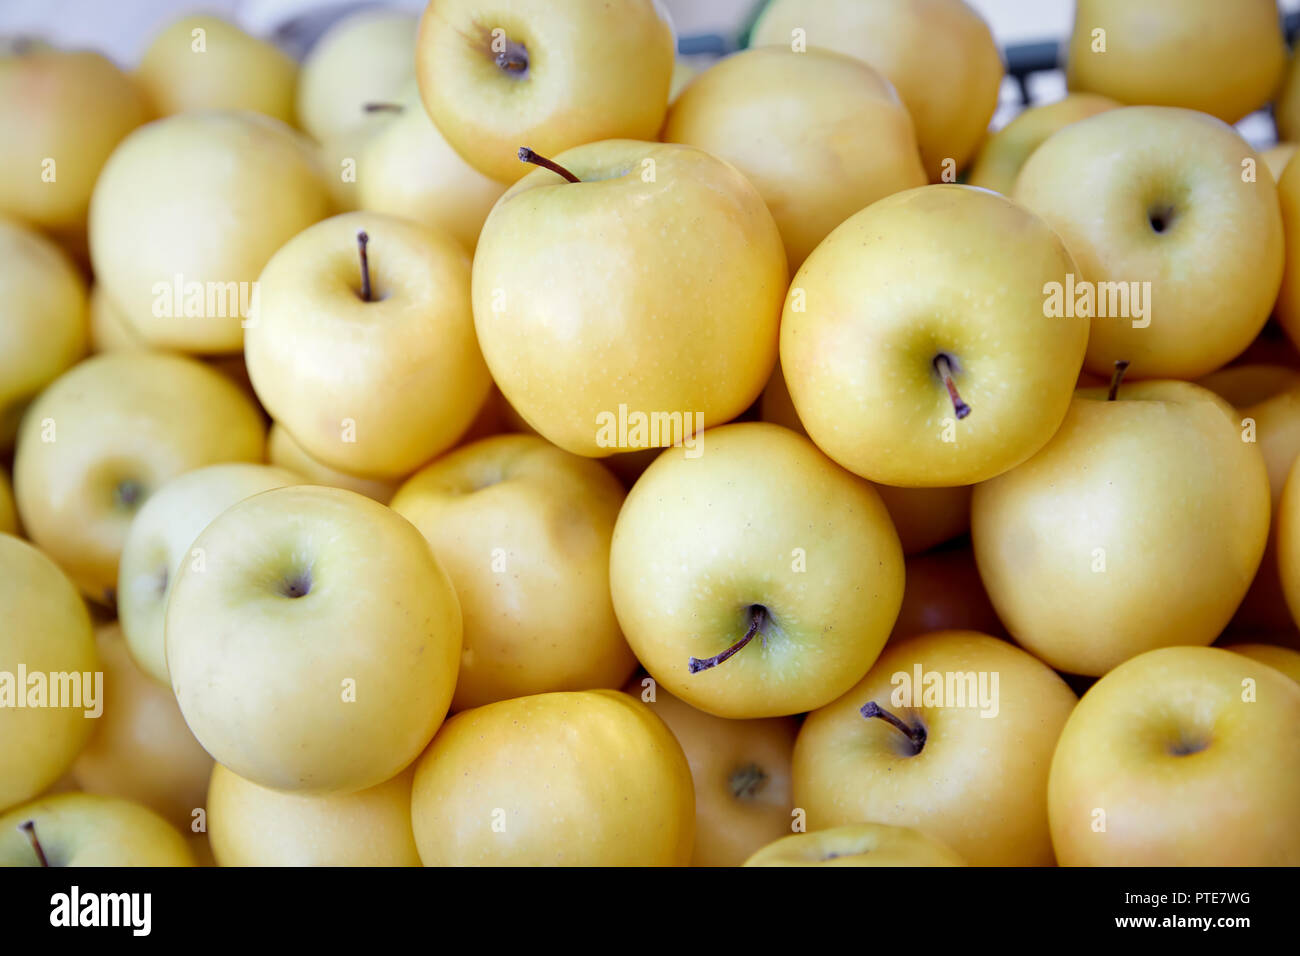 Pile of yellow apples on the market in Almaty, Kazakhstan Stock Photo